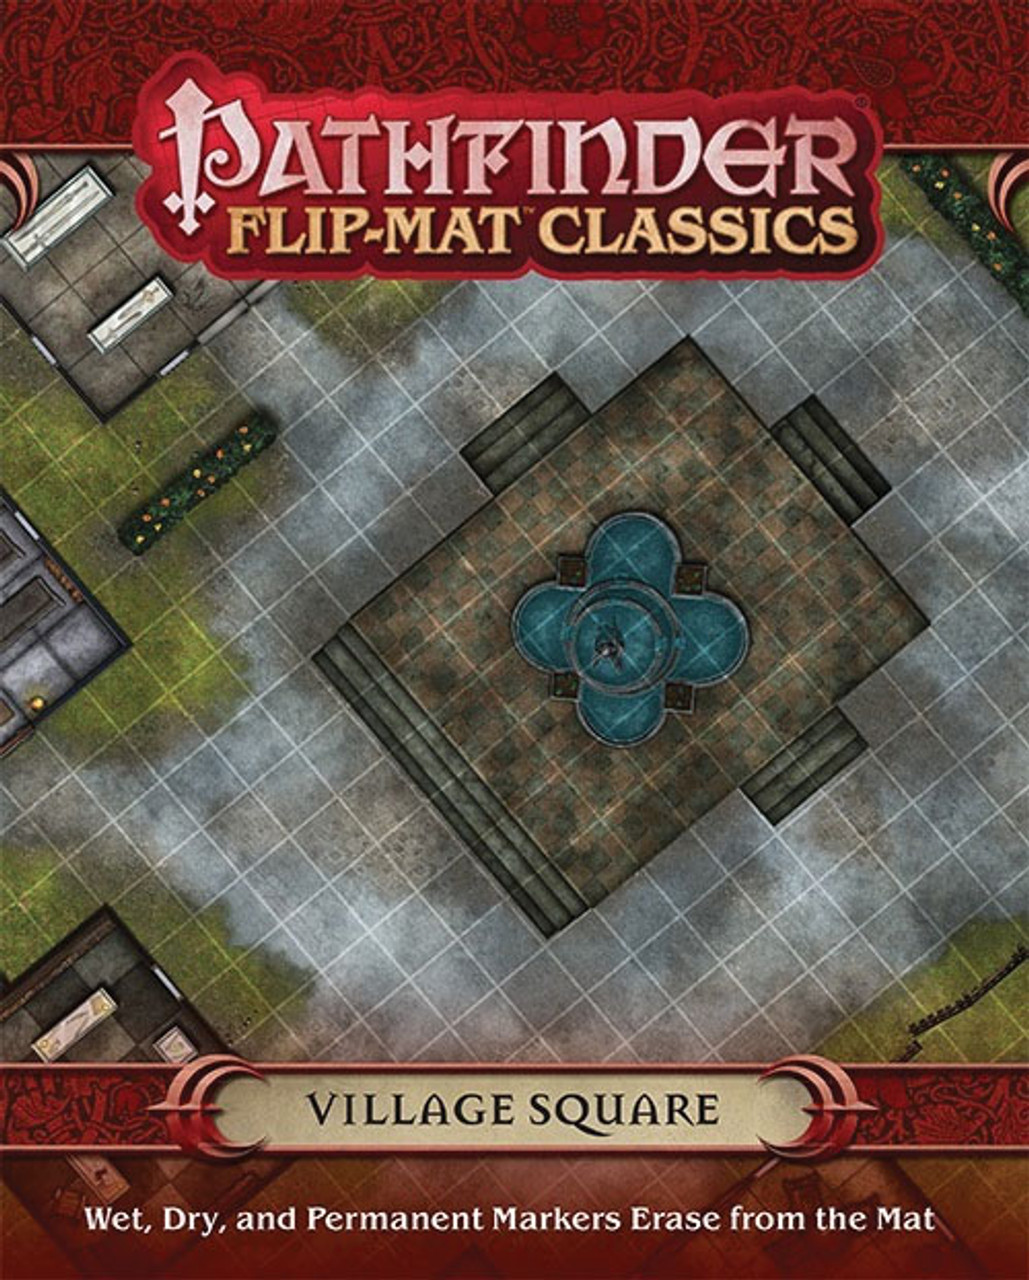 Village Square Flip Mat Classics Pathfinder RPG Dungeons & Dragons